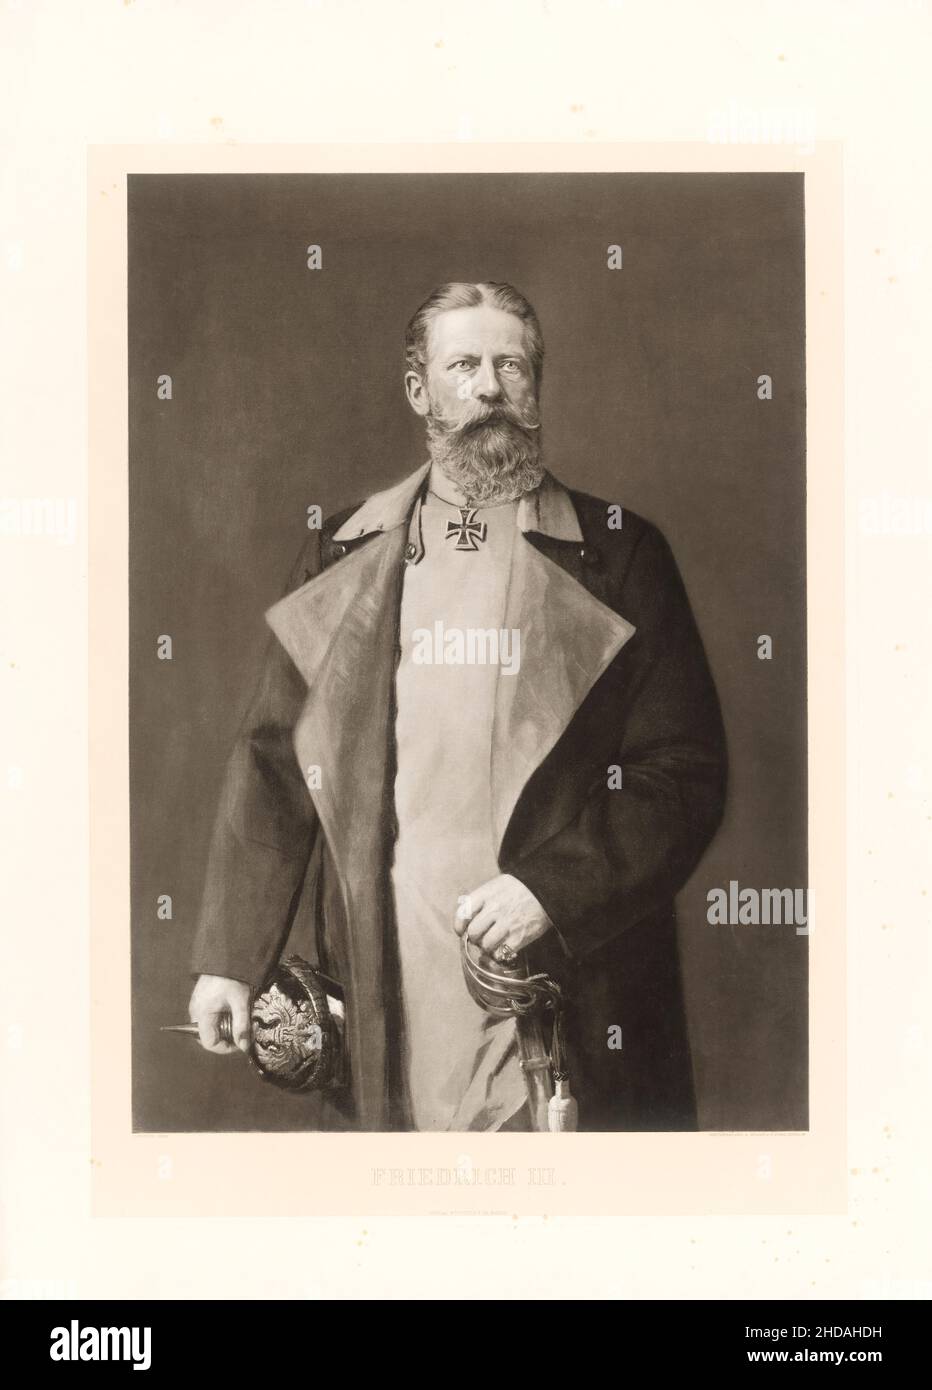 Ritratto di Federico III, imperatore tedesco. Federico III (in tedesco: Friedrich Wilhelm Nikolaus Karl 1831 – 1888) fu imperatore e re tedesco di Pru 1888 Foto Stock